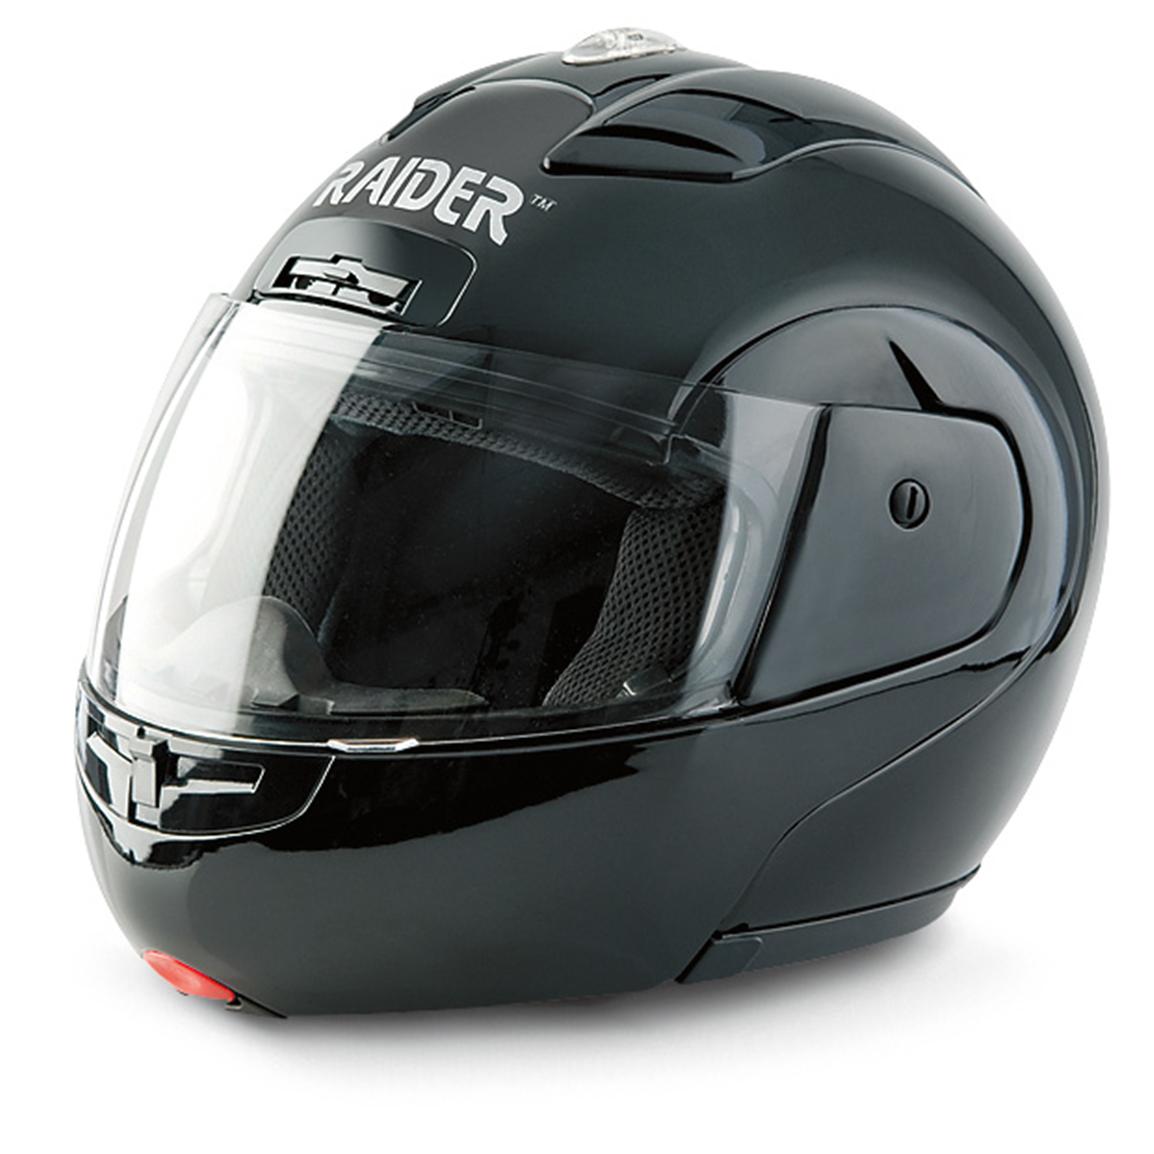 Raider™ Modular Motorcycle Helmet - 157722, Helmets & Goggles at Sportsman's Guide